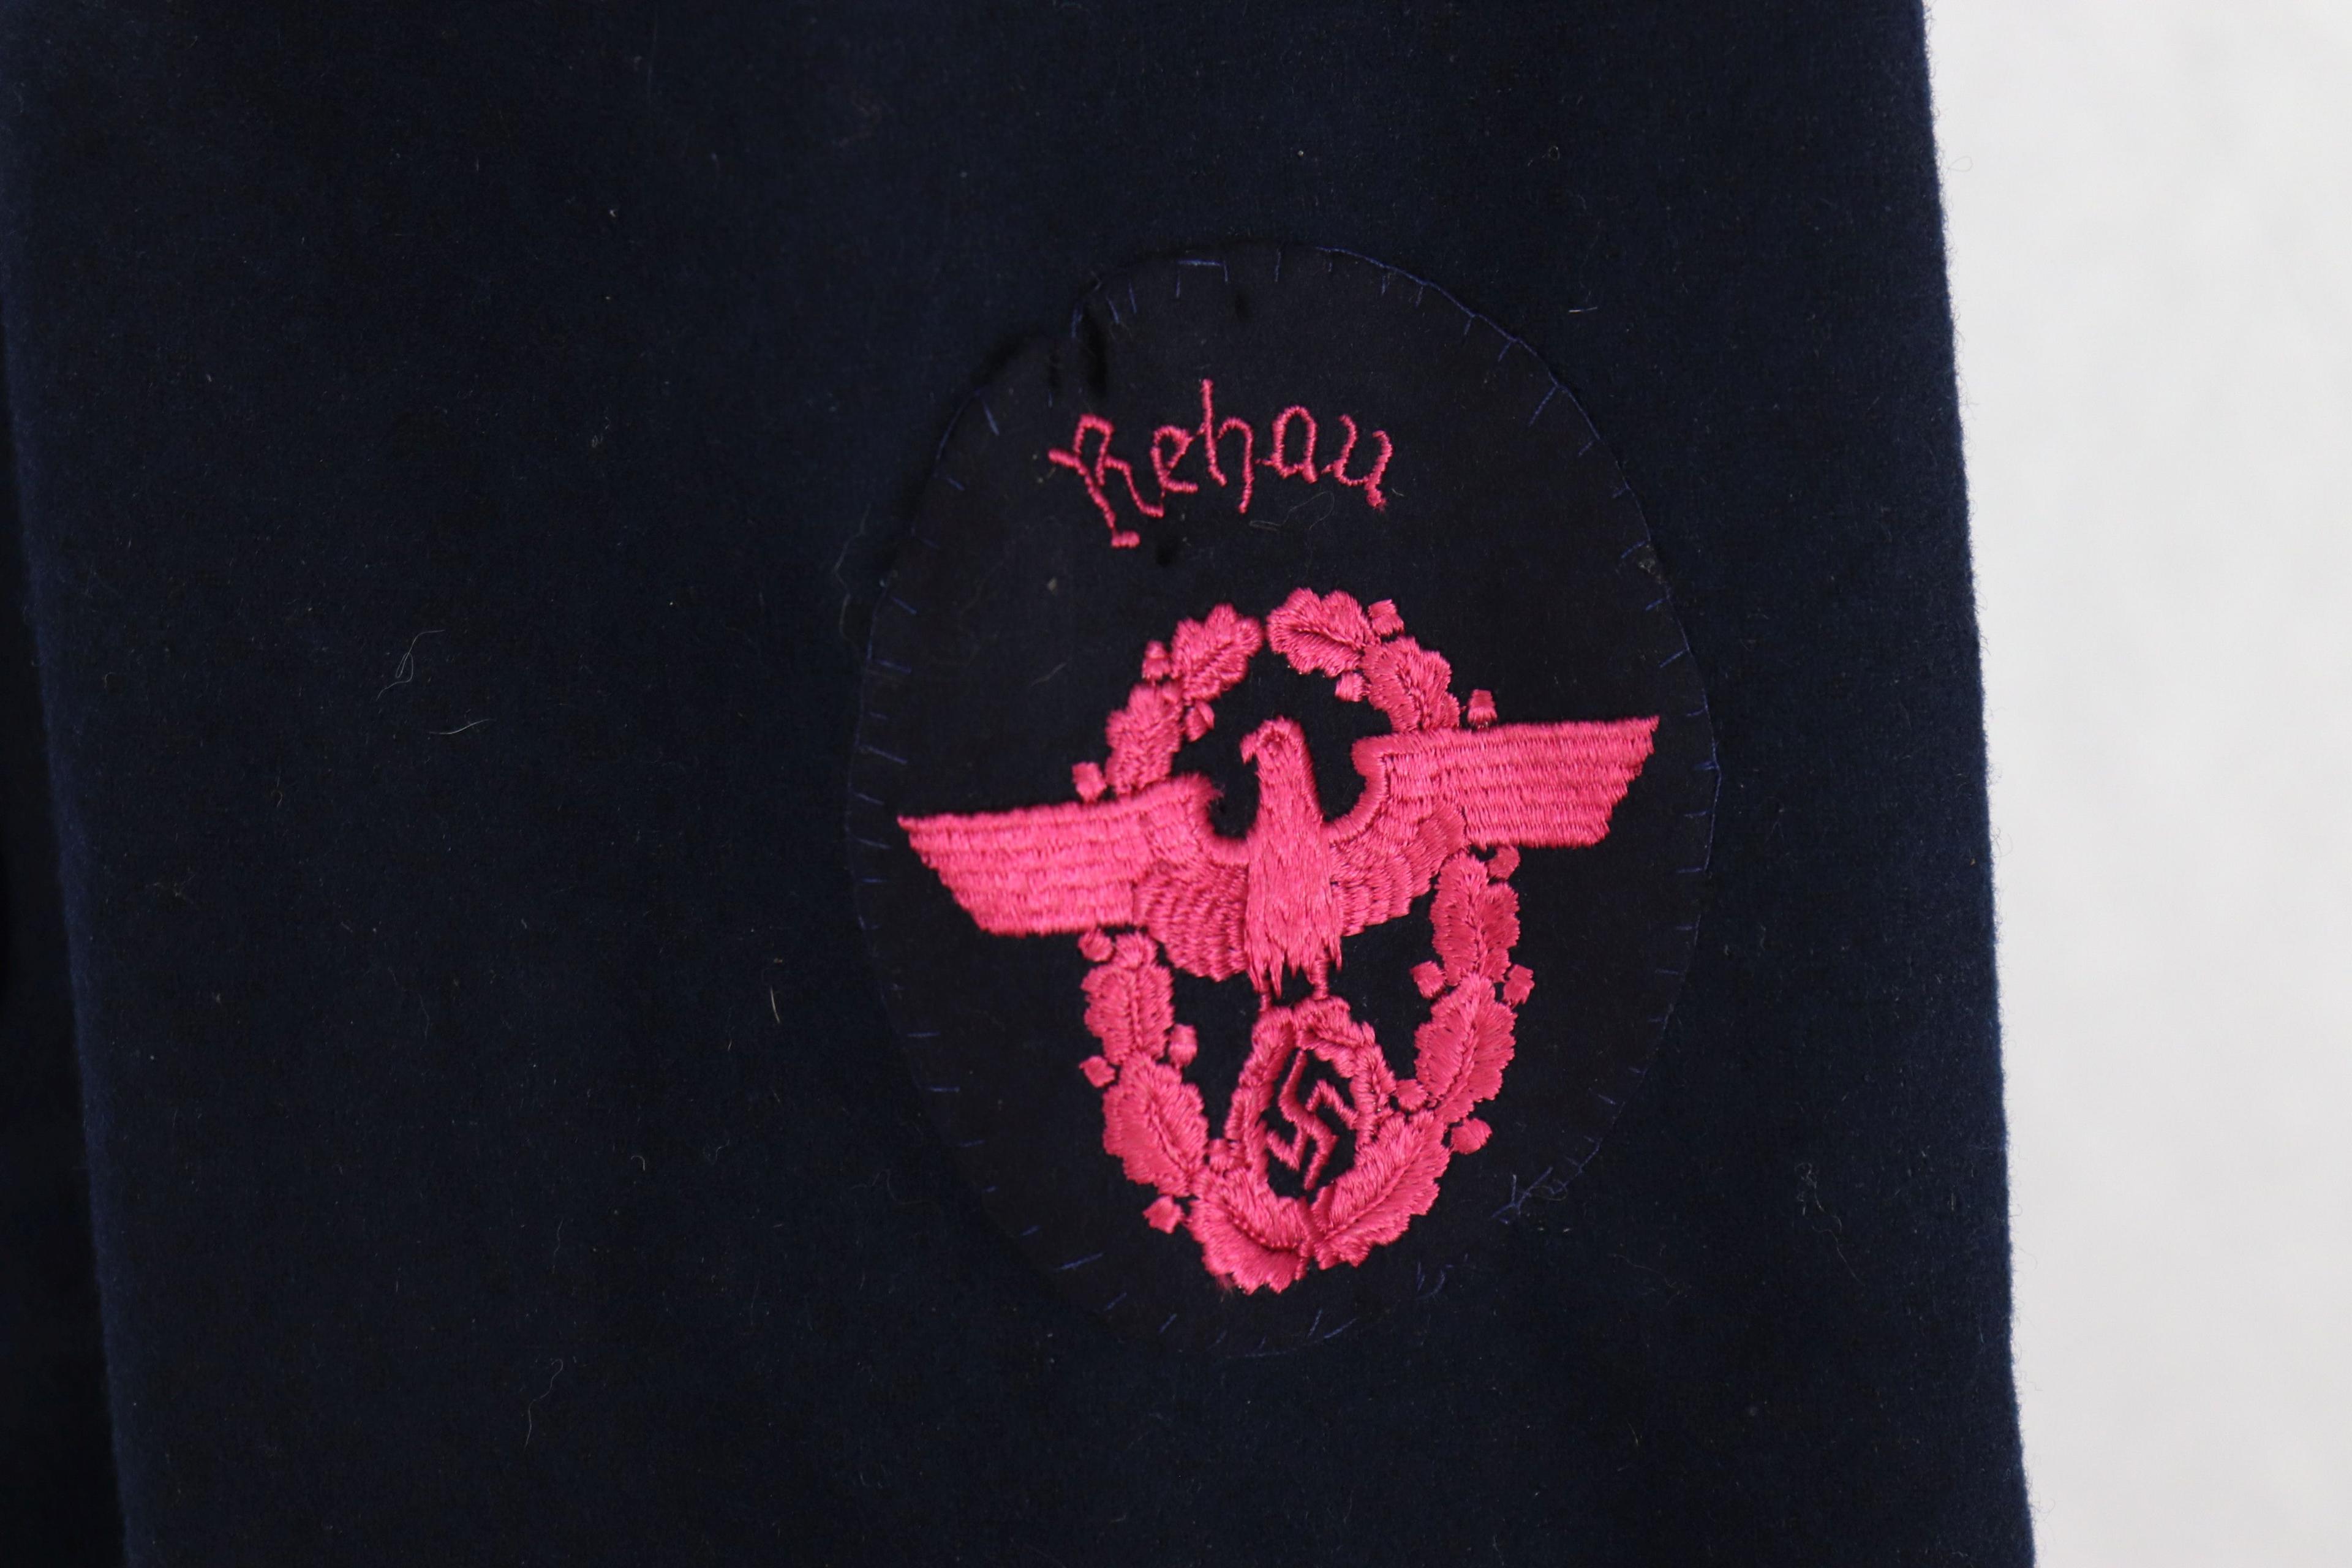 WWII German Fire Police Uniform Tunic